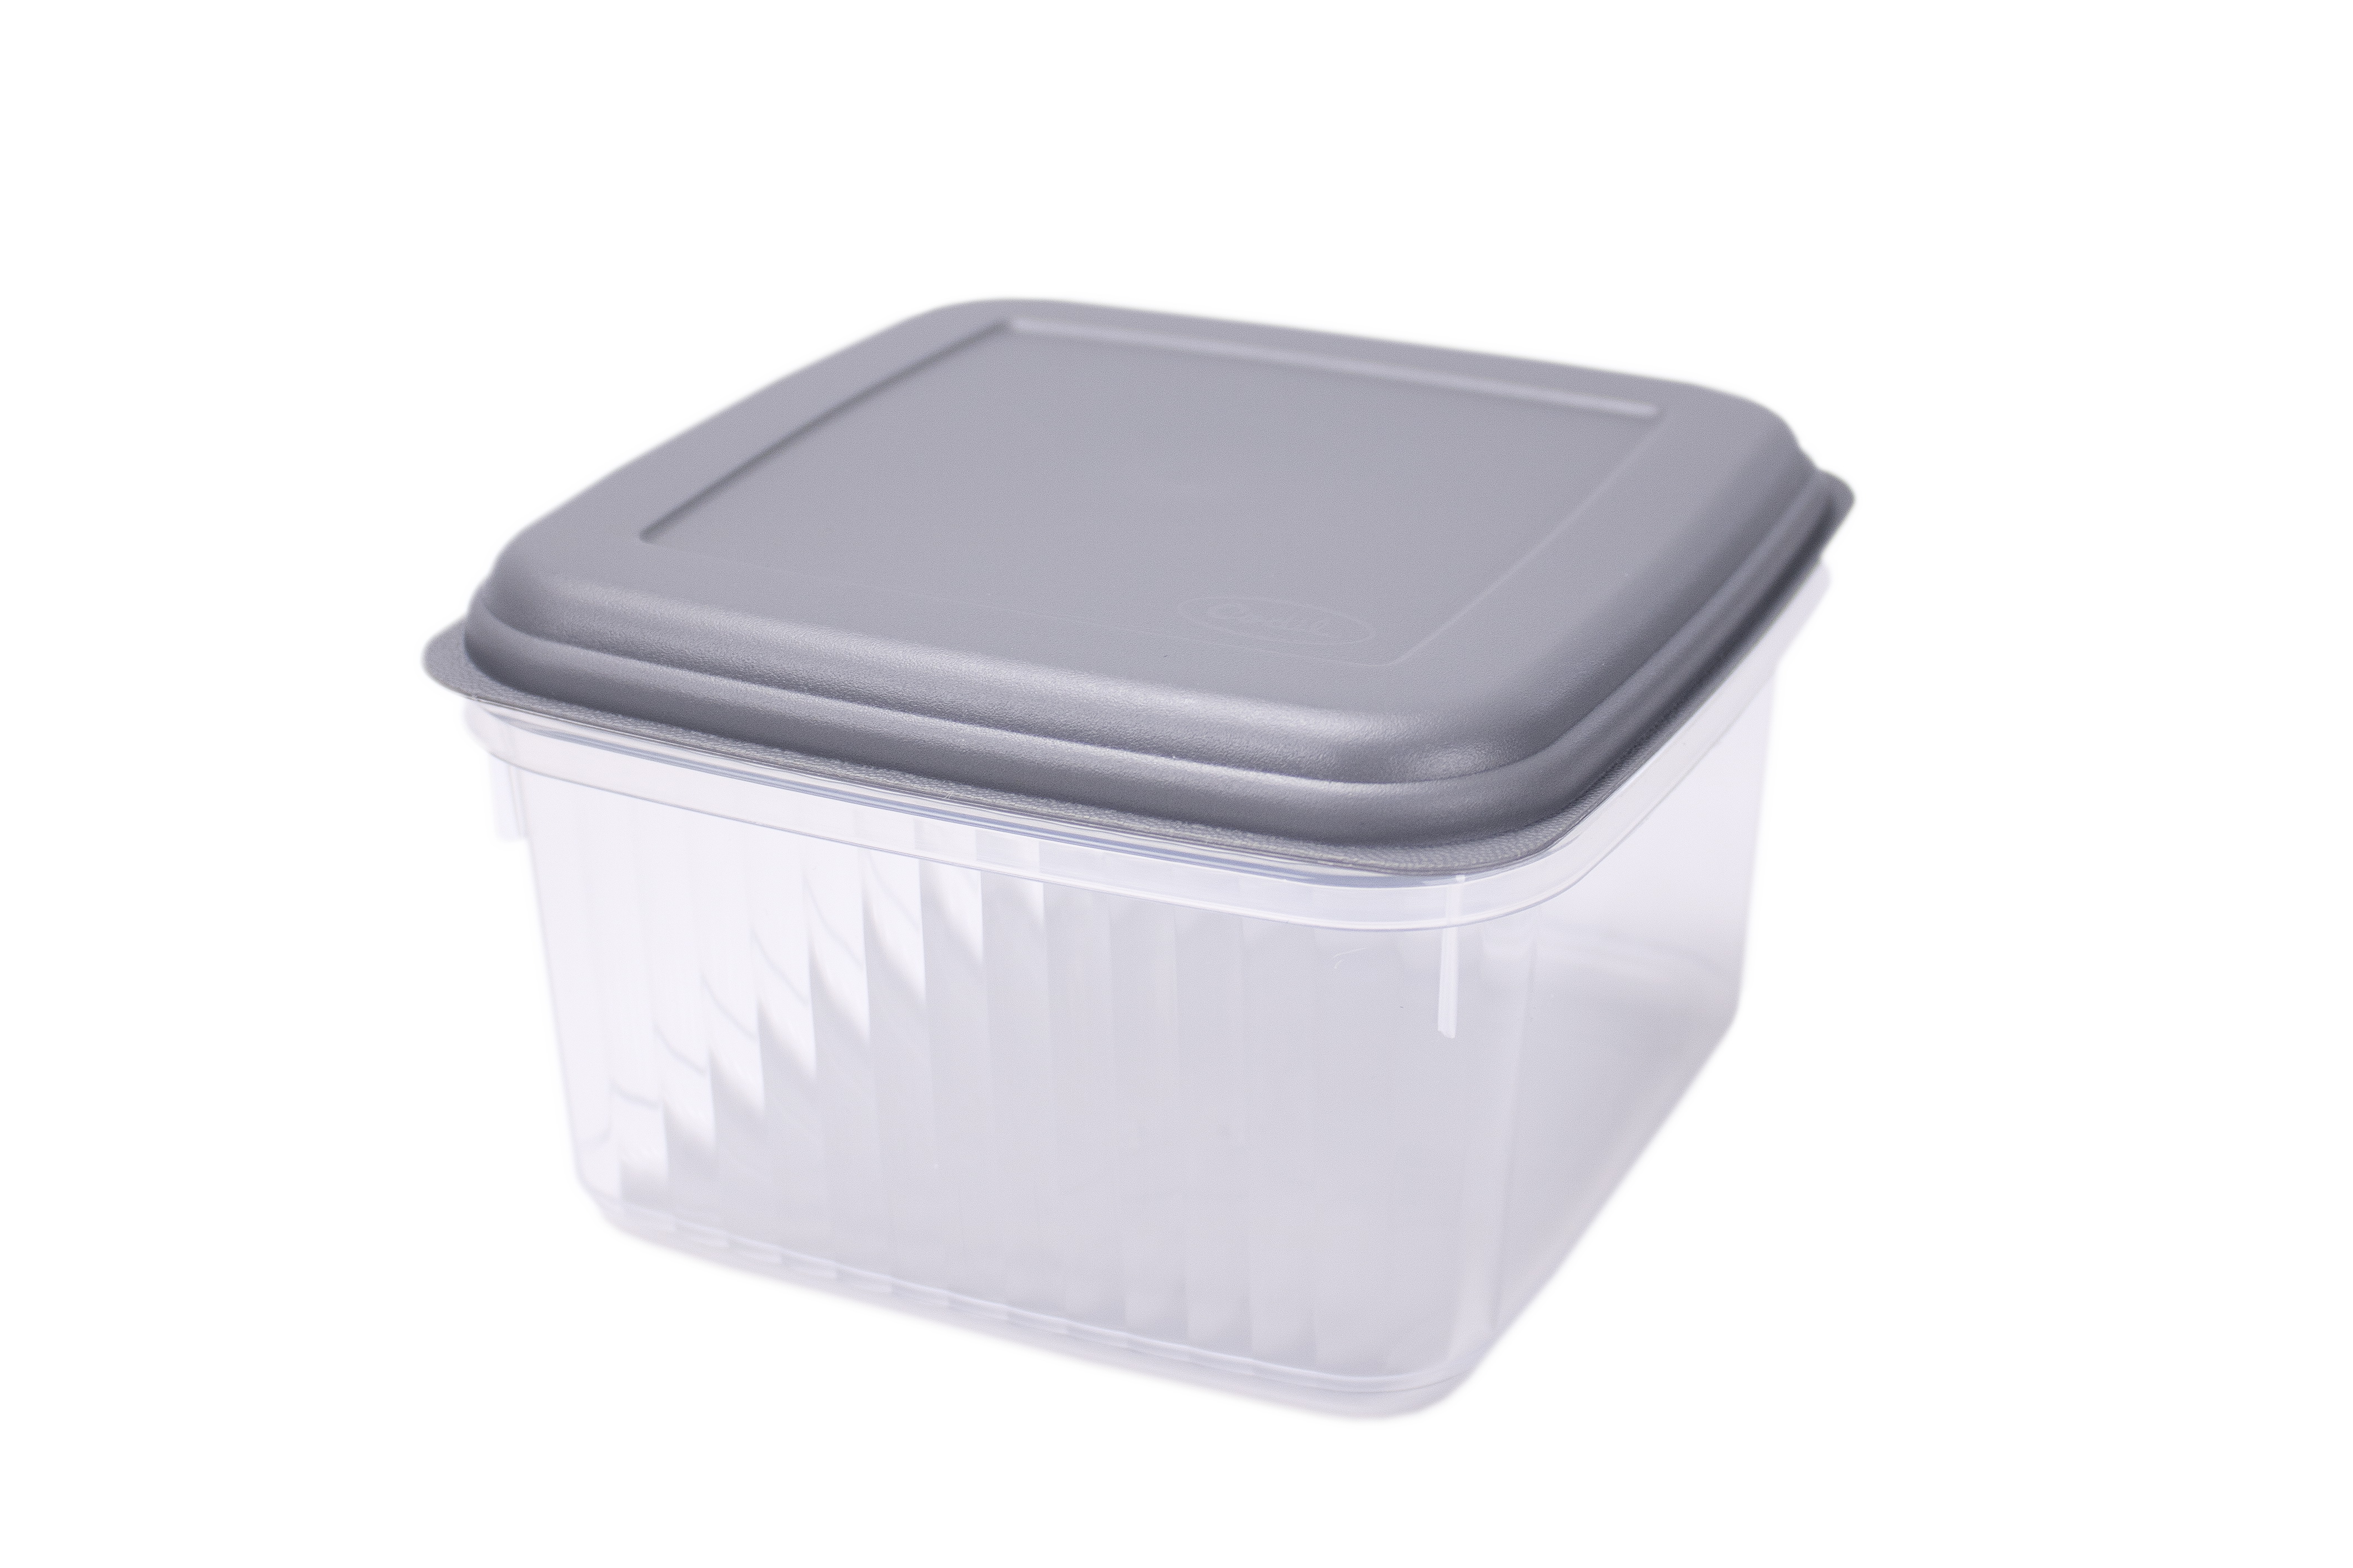 SQUARE FOOD BOX 0.8L